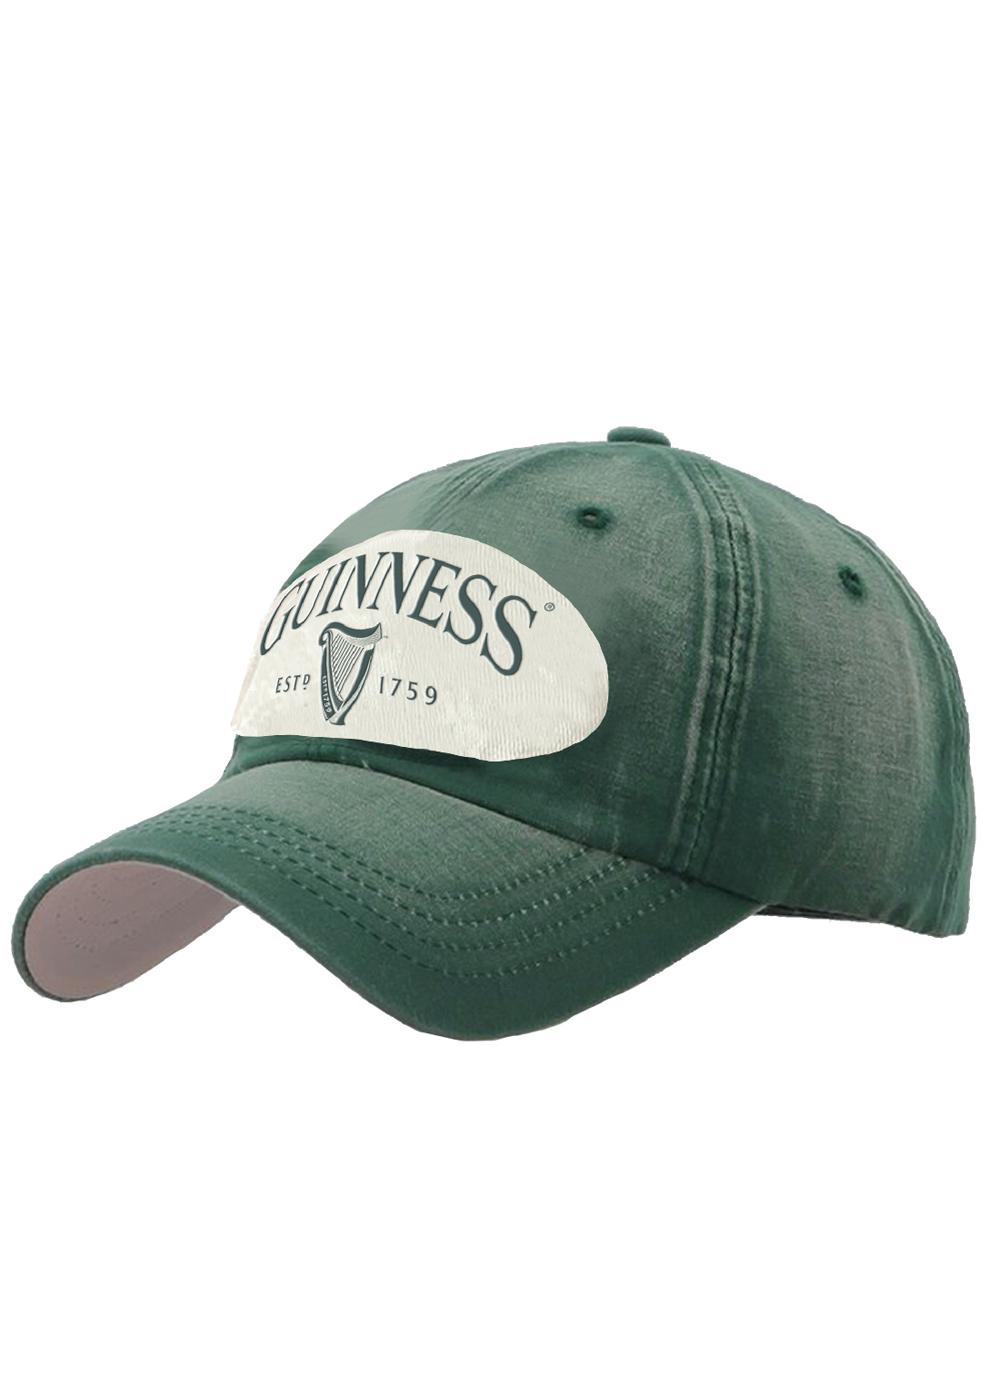 Baseball Cap for Men Women Italian Irish American Shamrock Unisex Cotton Adjustable Denim Cap Hat 